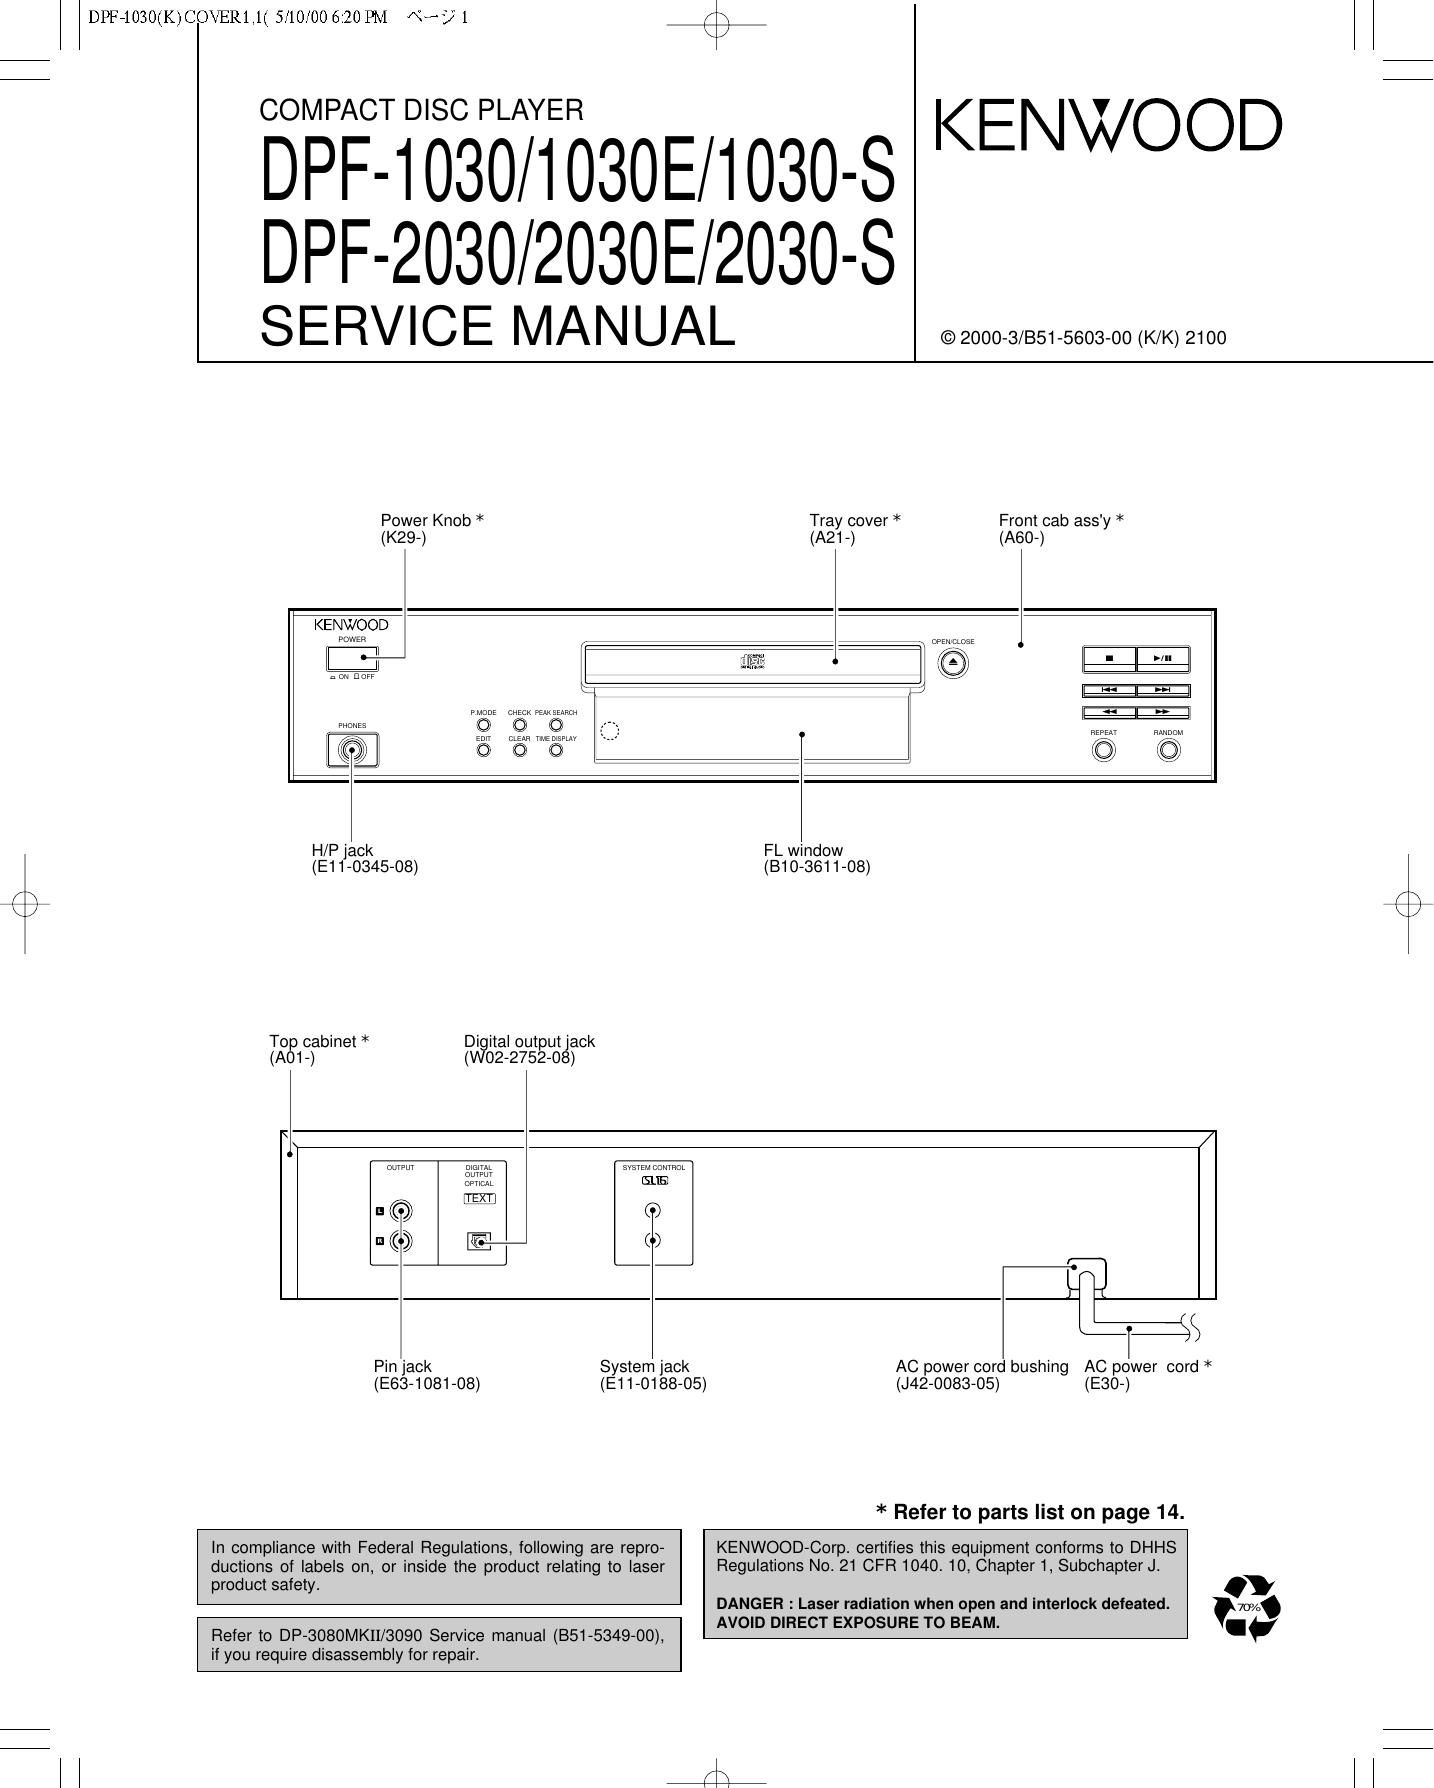 Kenwood DPF 2030 Service Manual